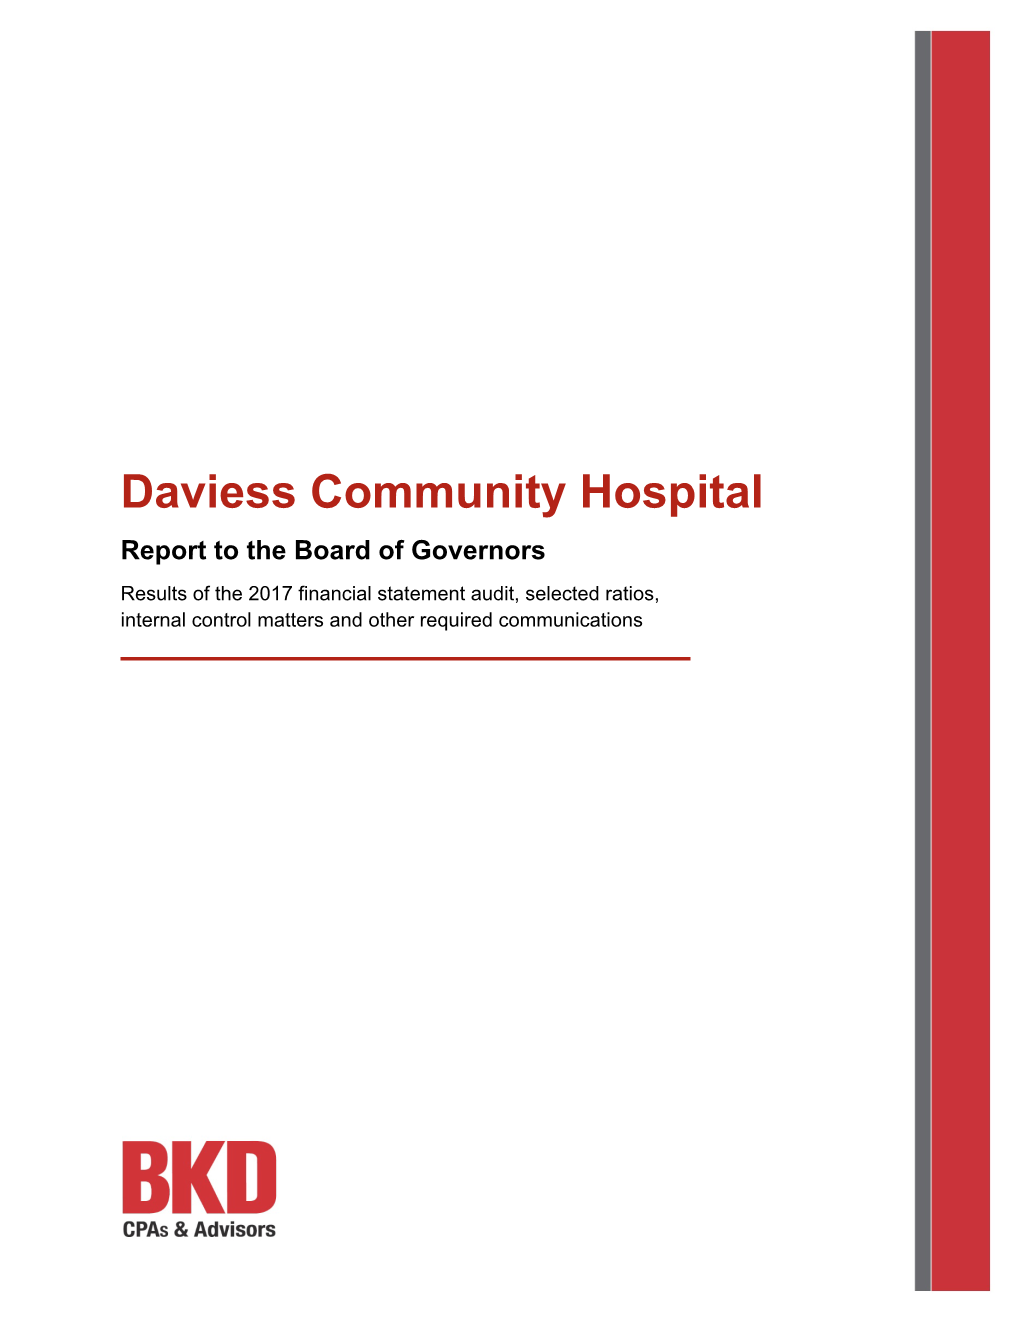 Daviess Community Hospital Washington, Indiana